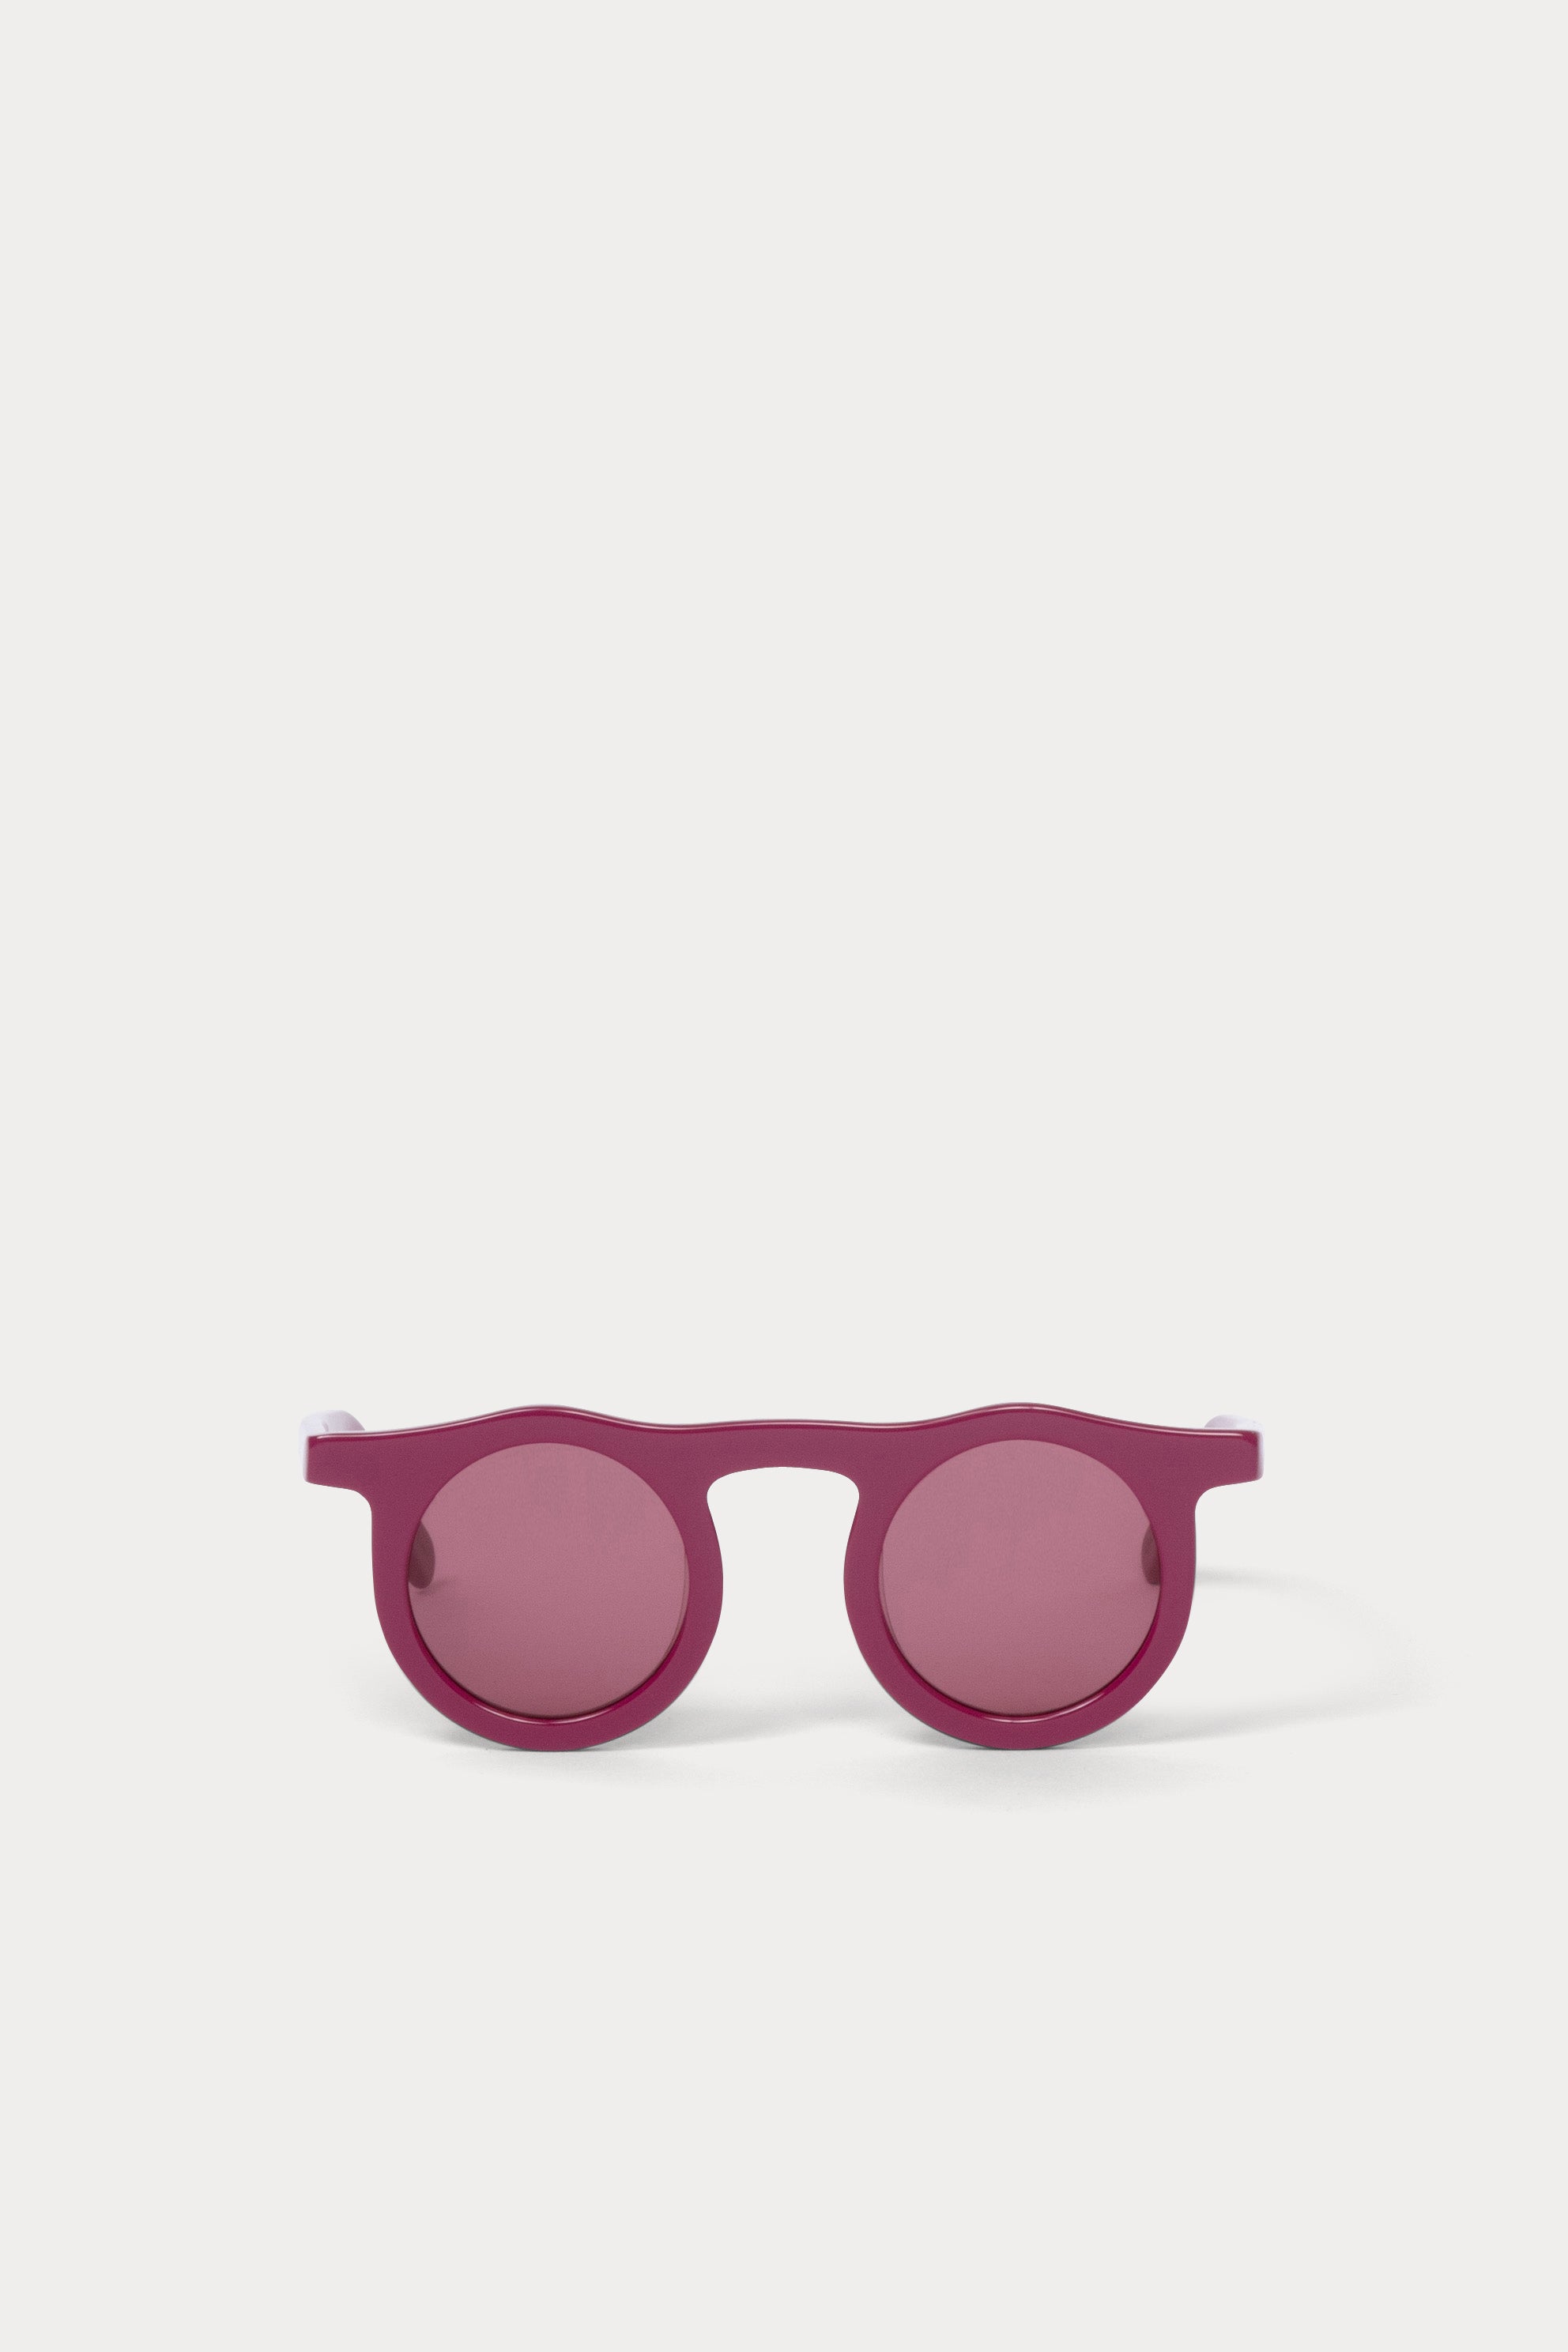 Lind Sunglasses-SUNGLASSES-Rachel Comey